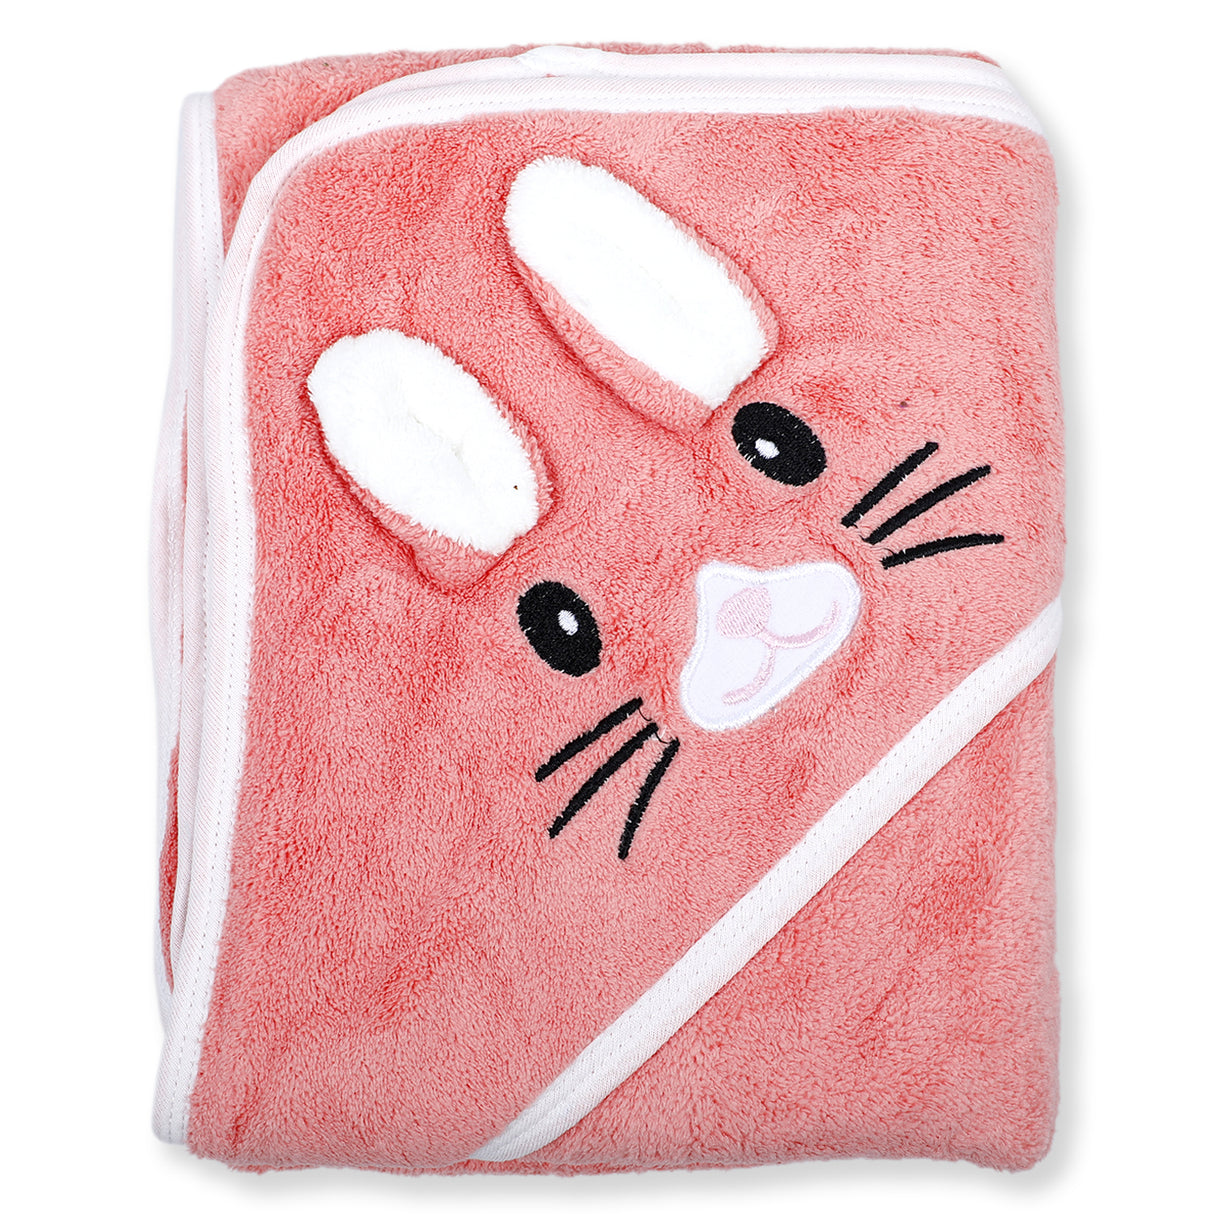 Soft And Comfy Microfiber Hooded Bath Towel